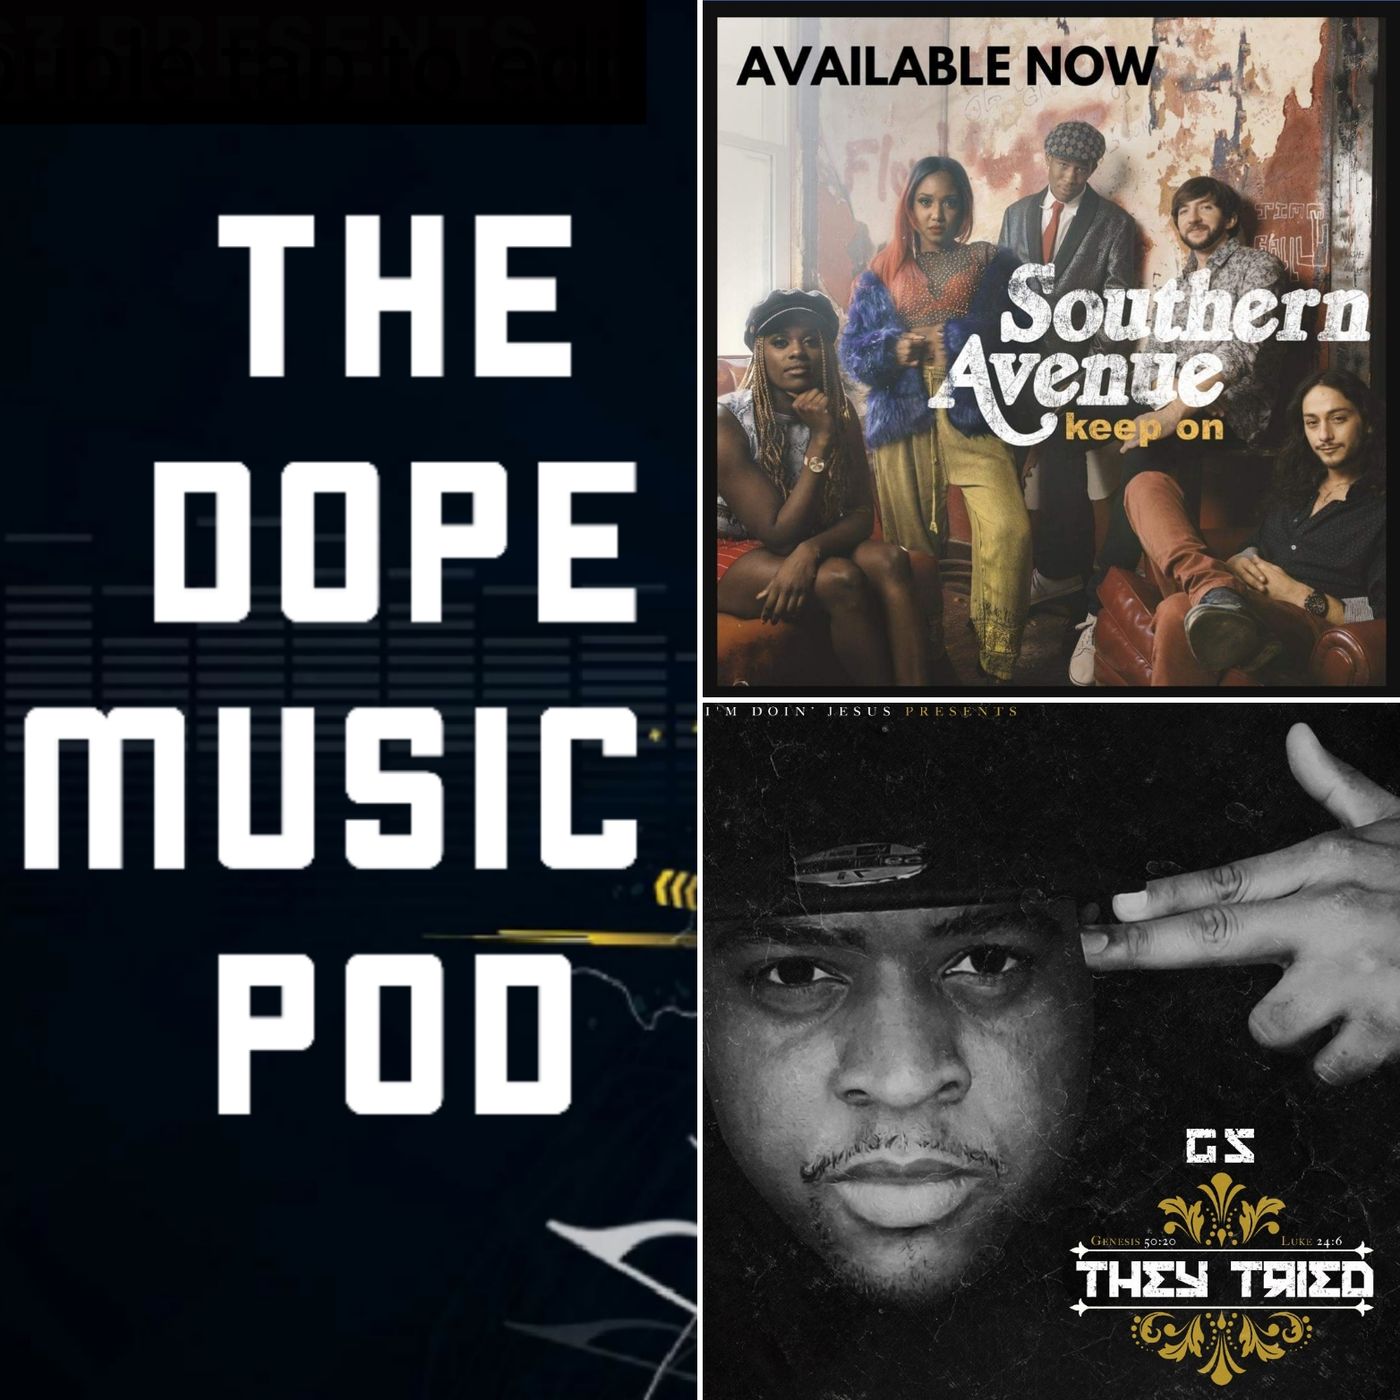 THE DOPE MUSIC POD Vol. 22: Hip Hop, Blues, & Reggae Covers